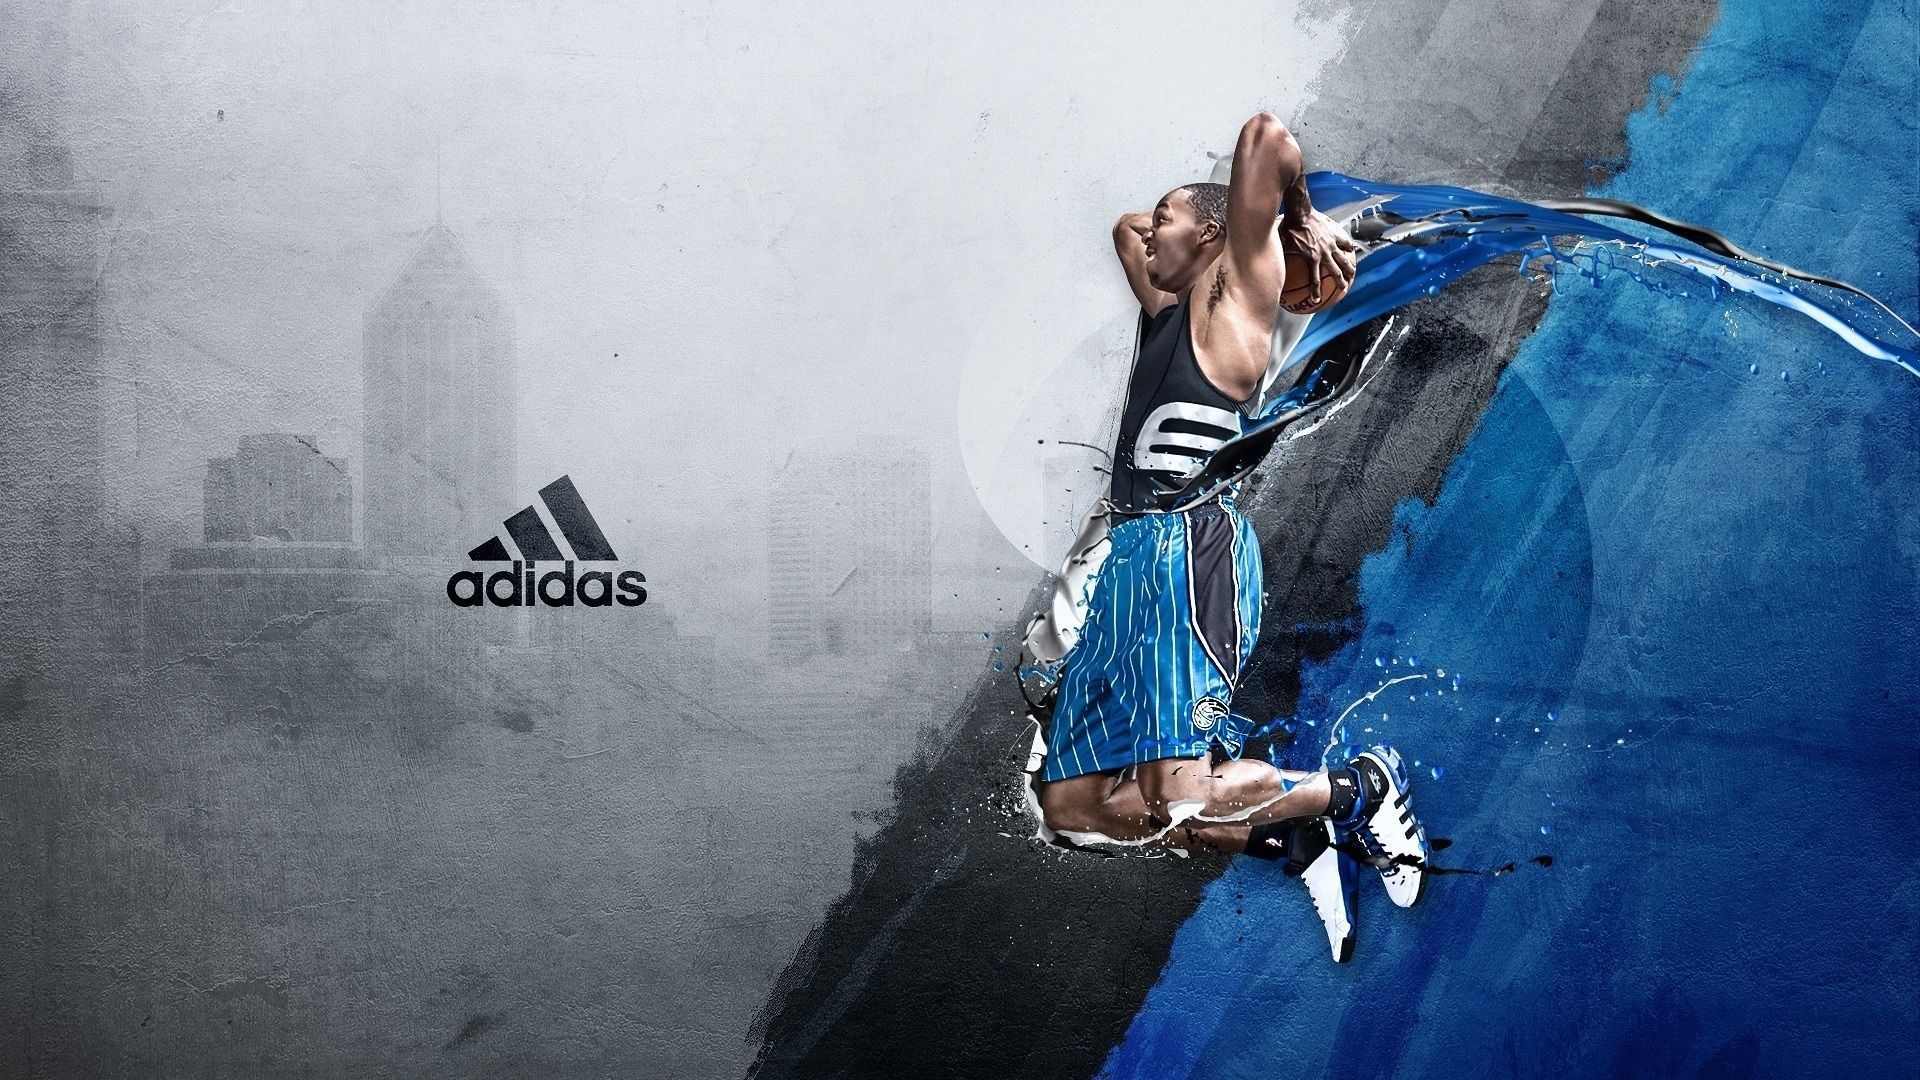 Adidas NBA Basketball Wallpapers HD Backgrounds